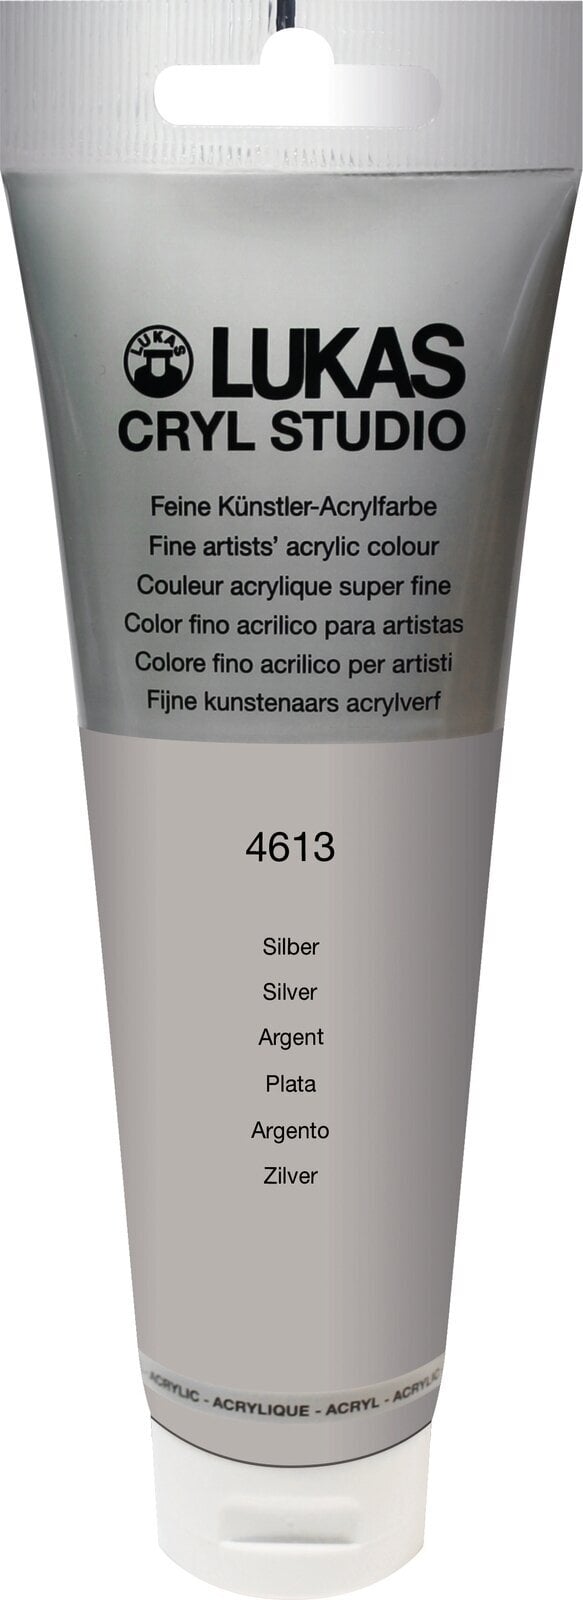 Akrilfesték Lukas Cryl Studio Acrylic Paint Plastic Tube Akril festék Silver 125 ml 1 db